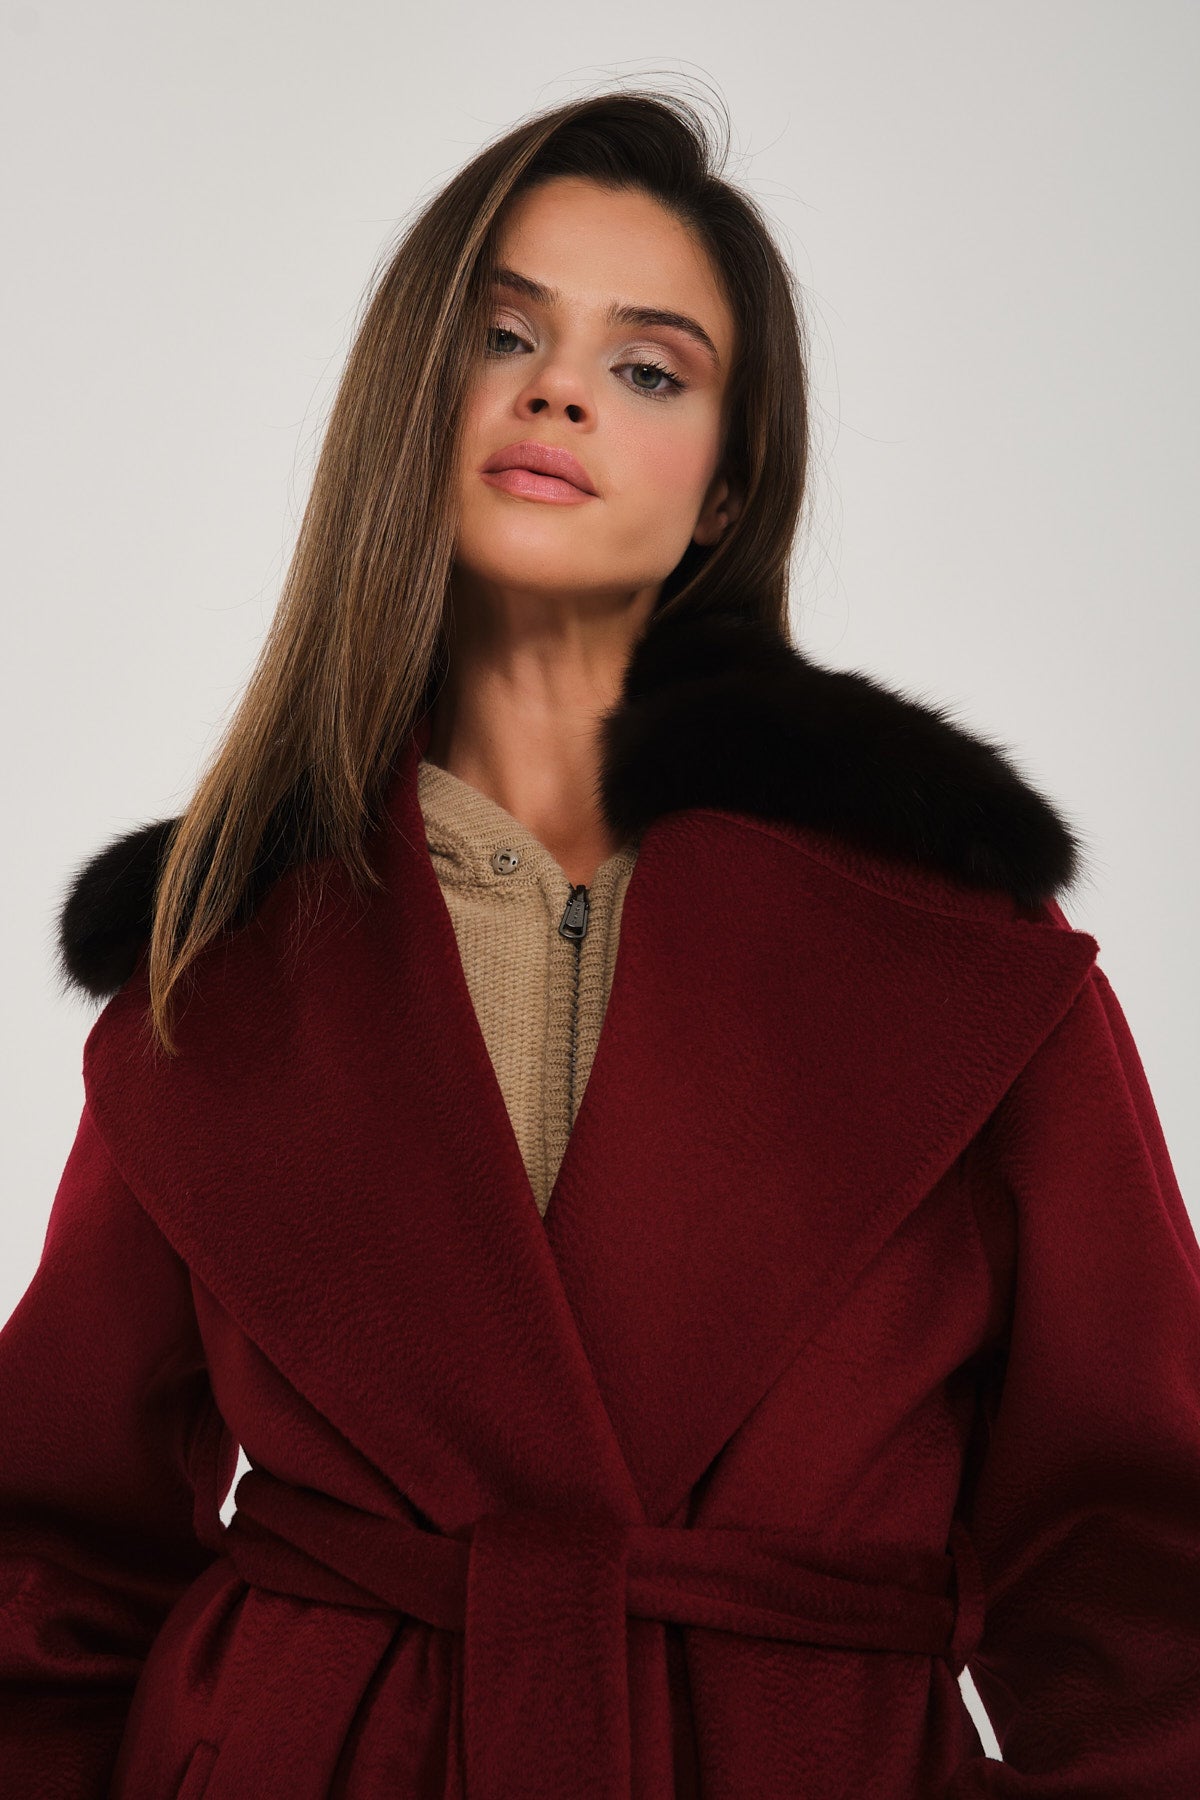 Burgundy Wool Long Coat